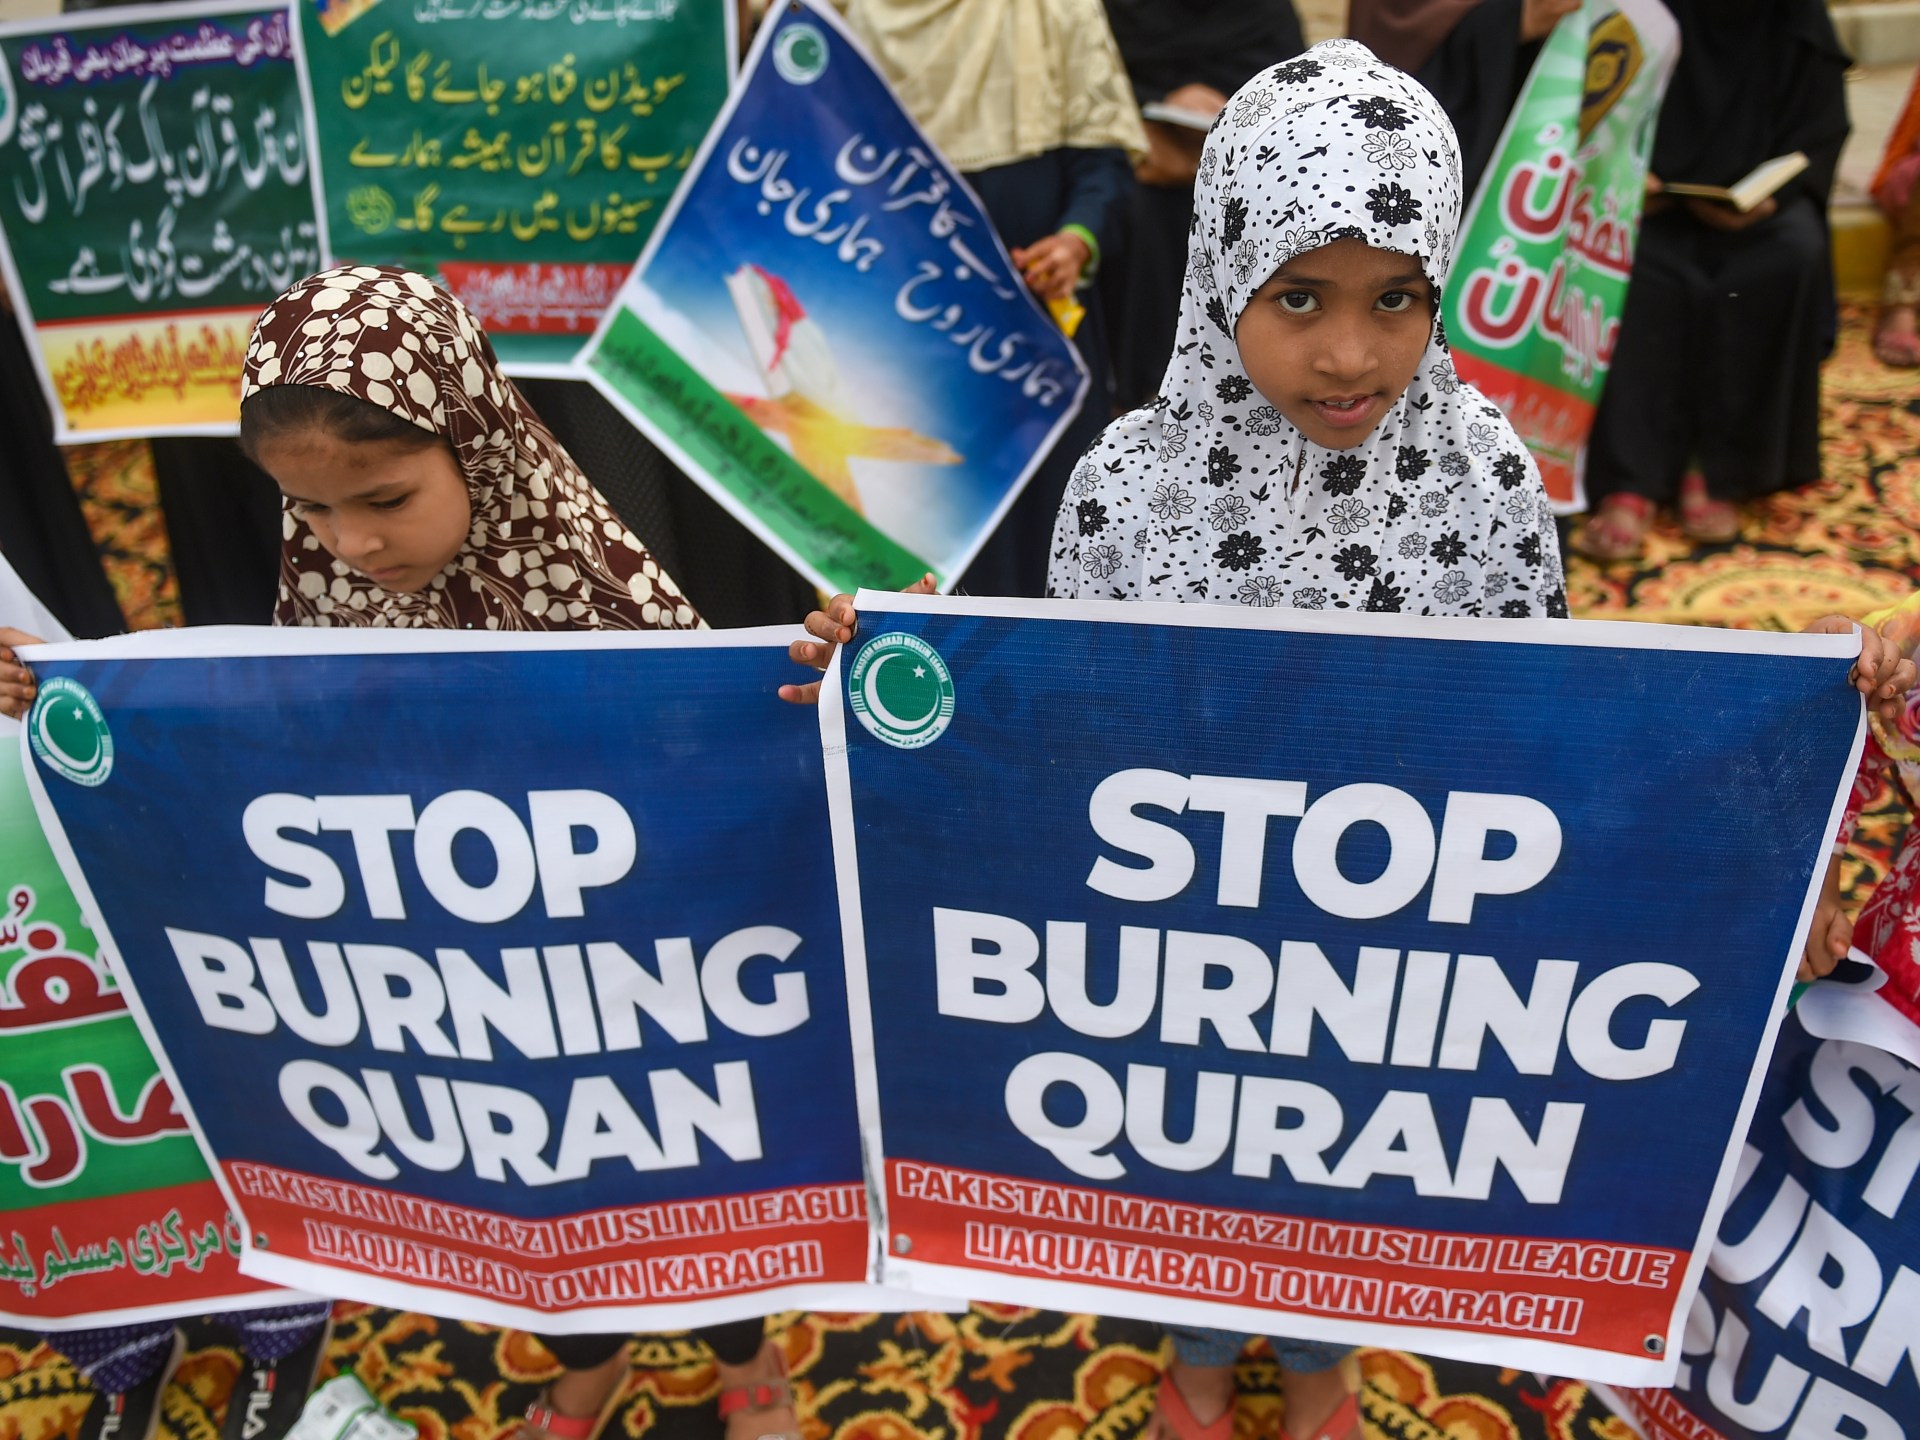 Denmark’s parliament adopts law banning Quran burnings | Islamophobia News #Denmarks #parliament #adopts #law #banning #Quran #burnings #Islamophobia #News